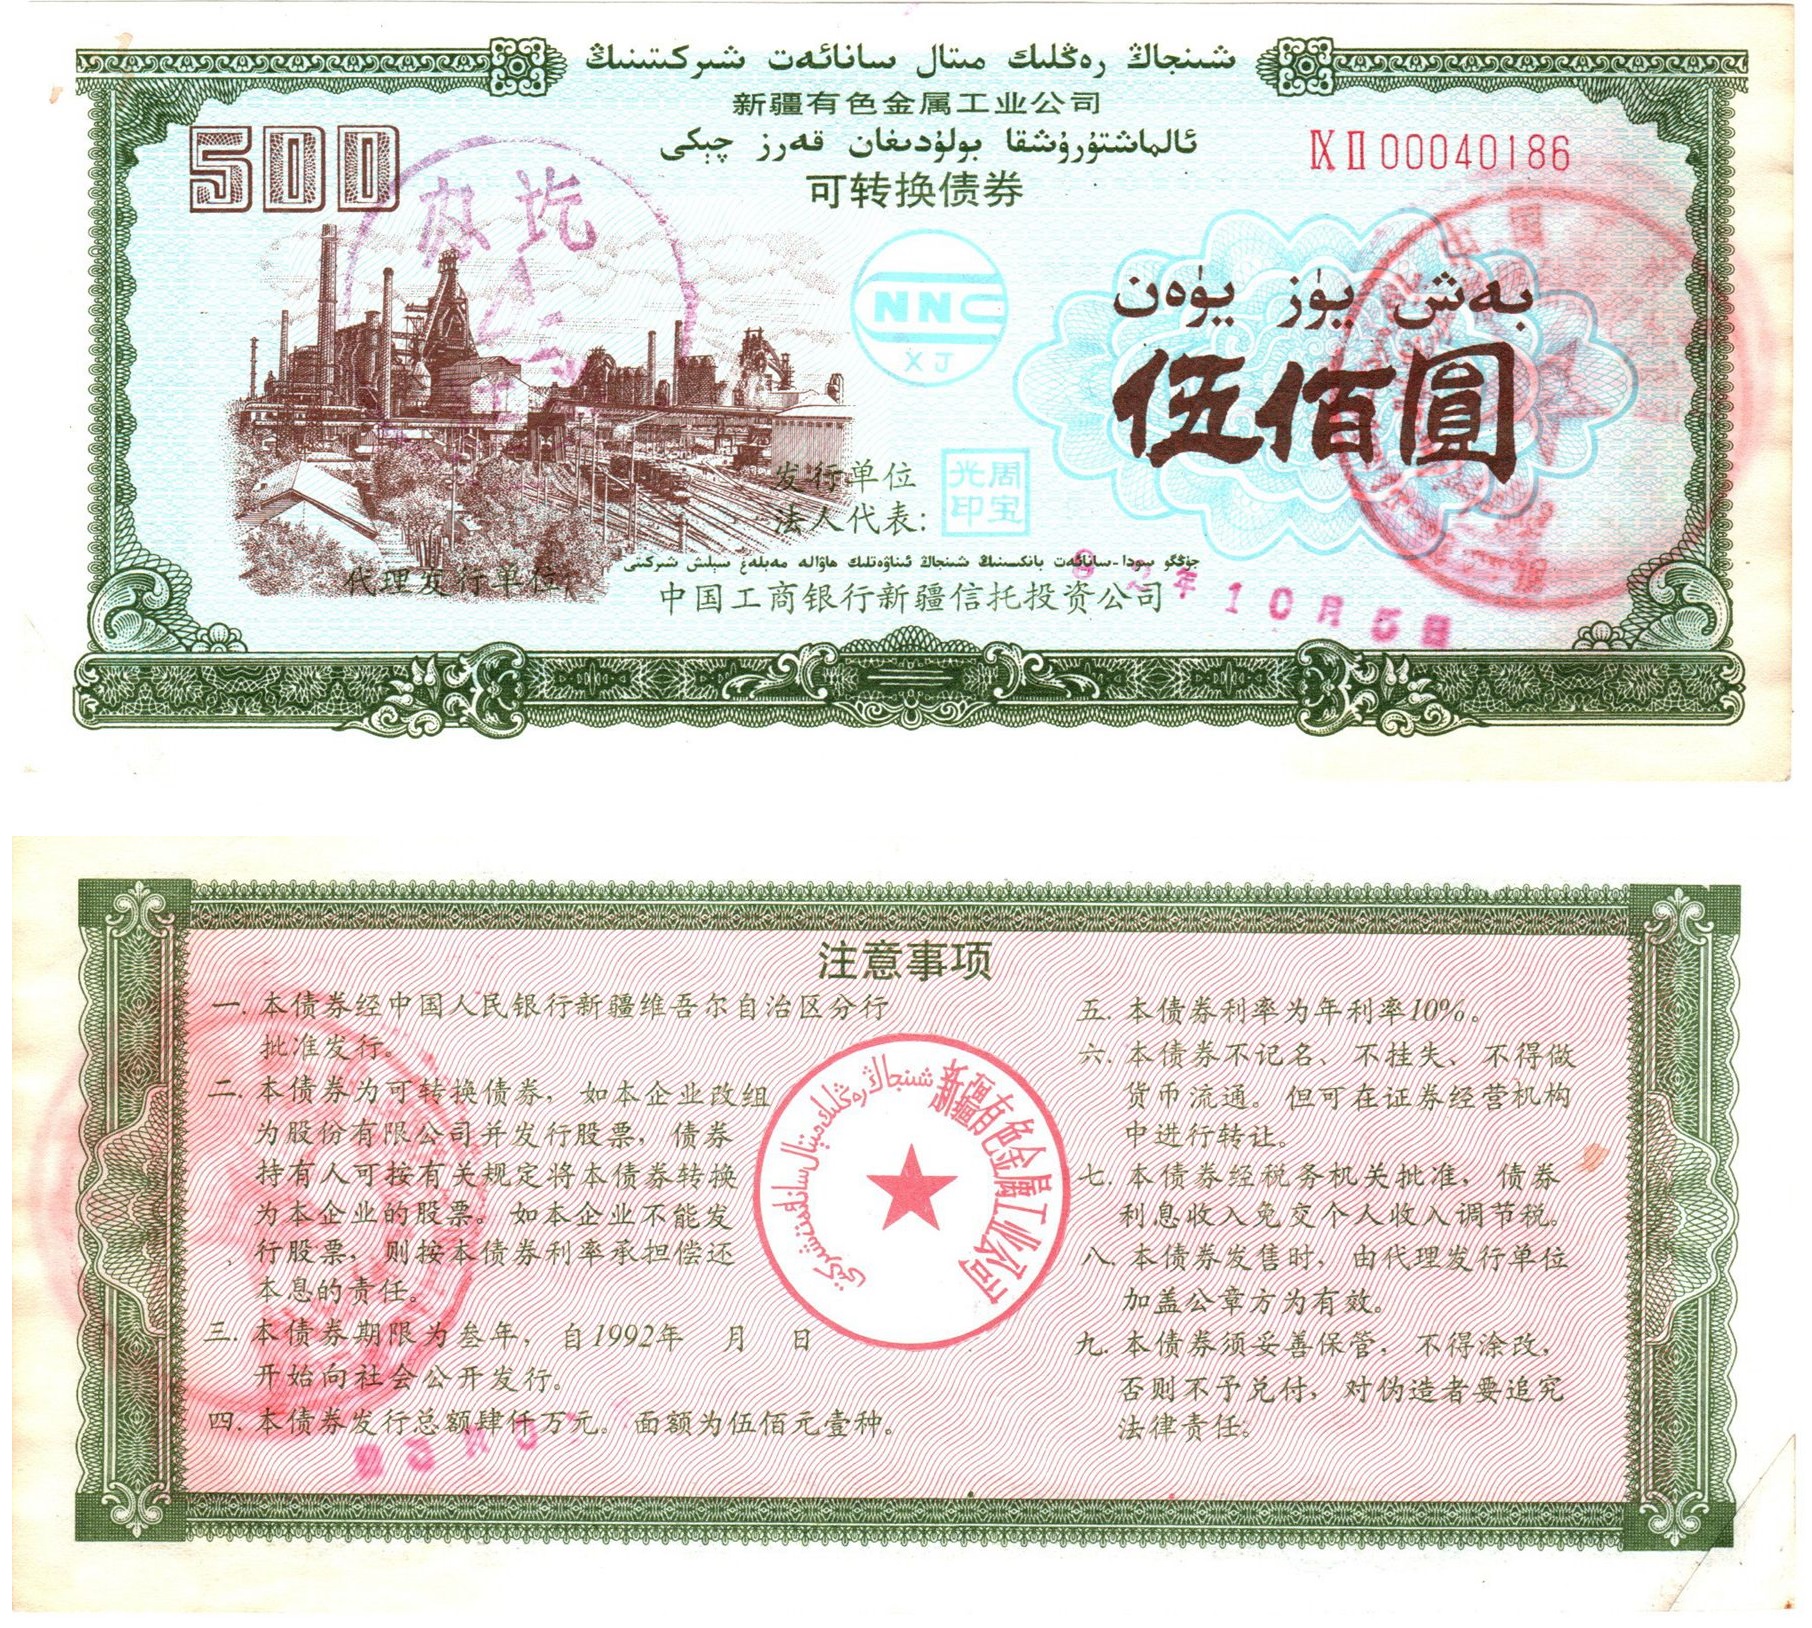 B8086, Sinkiang Metal Co., Ltd, 10%, 2 Years Corporate Bond 500 Yuan, China 1992